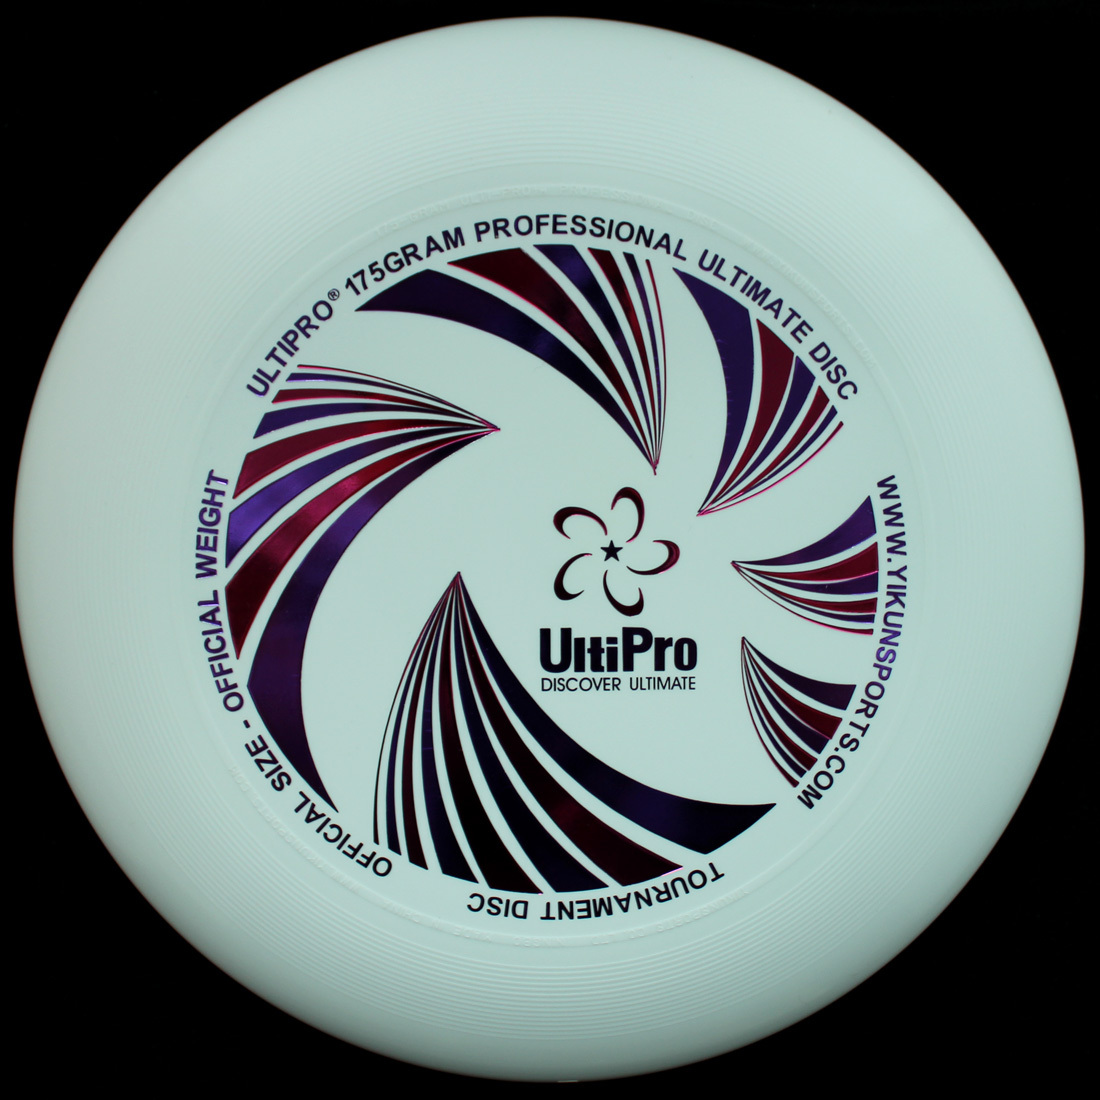 UltiWave 极浪系列 175g UltiPro专业极限飞盘 白|深紫+紫